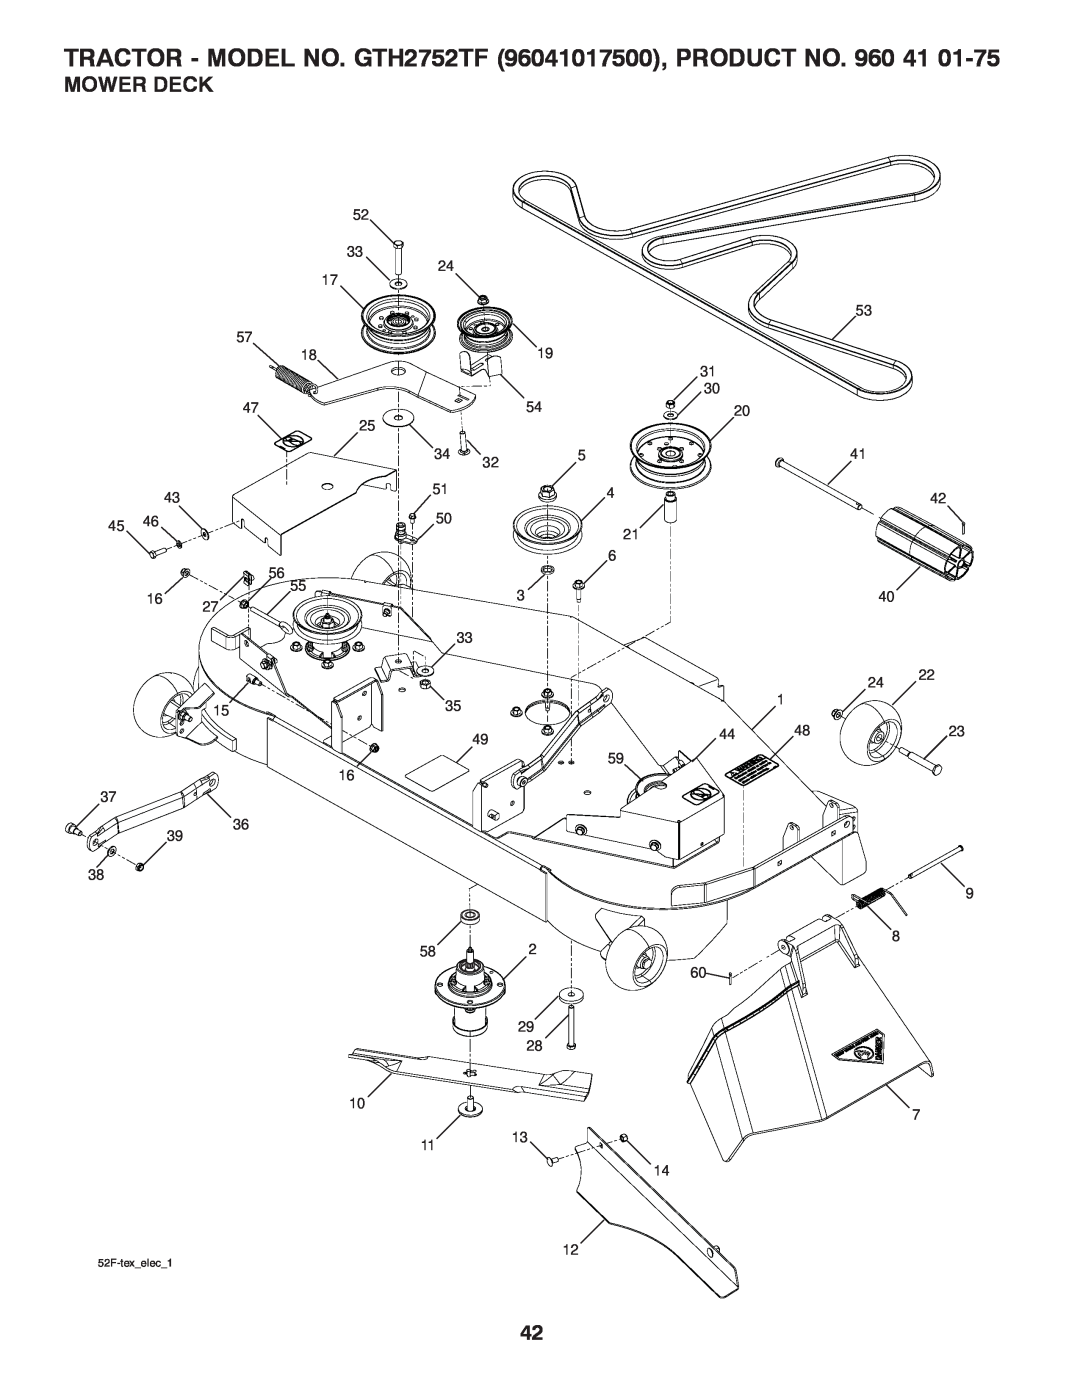 Husqvarna owner manual Mower Deck, TRACTOR - MODEL NO. GTH2752TF 96041017500, PRODUCT NO. 960, 52F-texelec1 